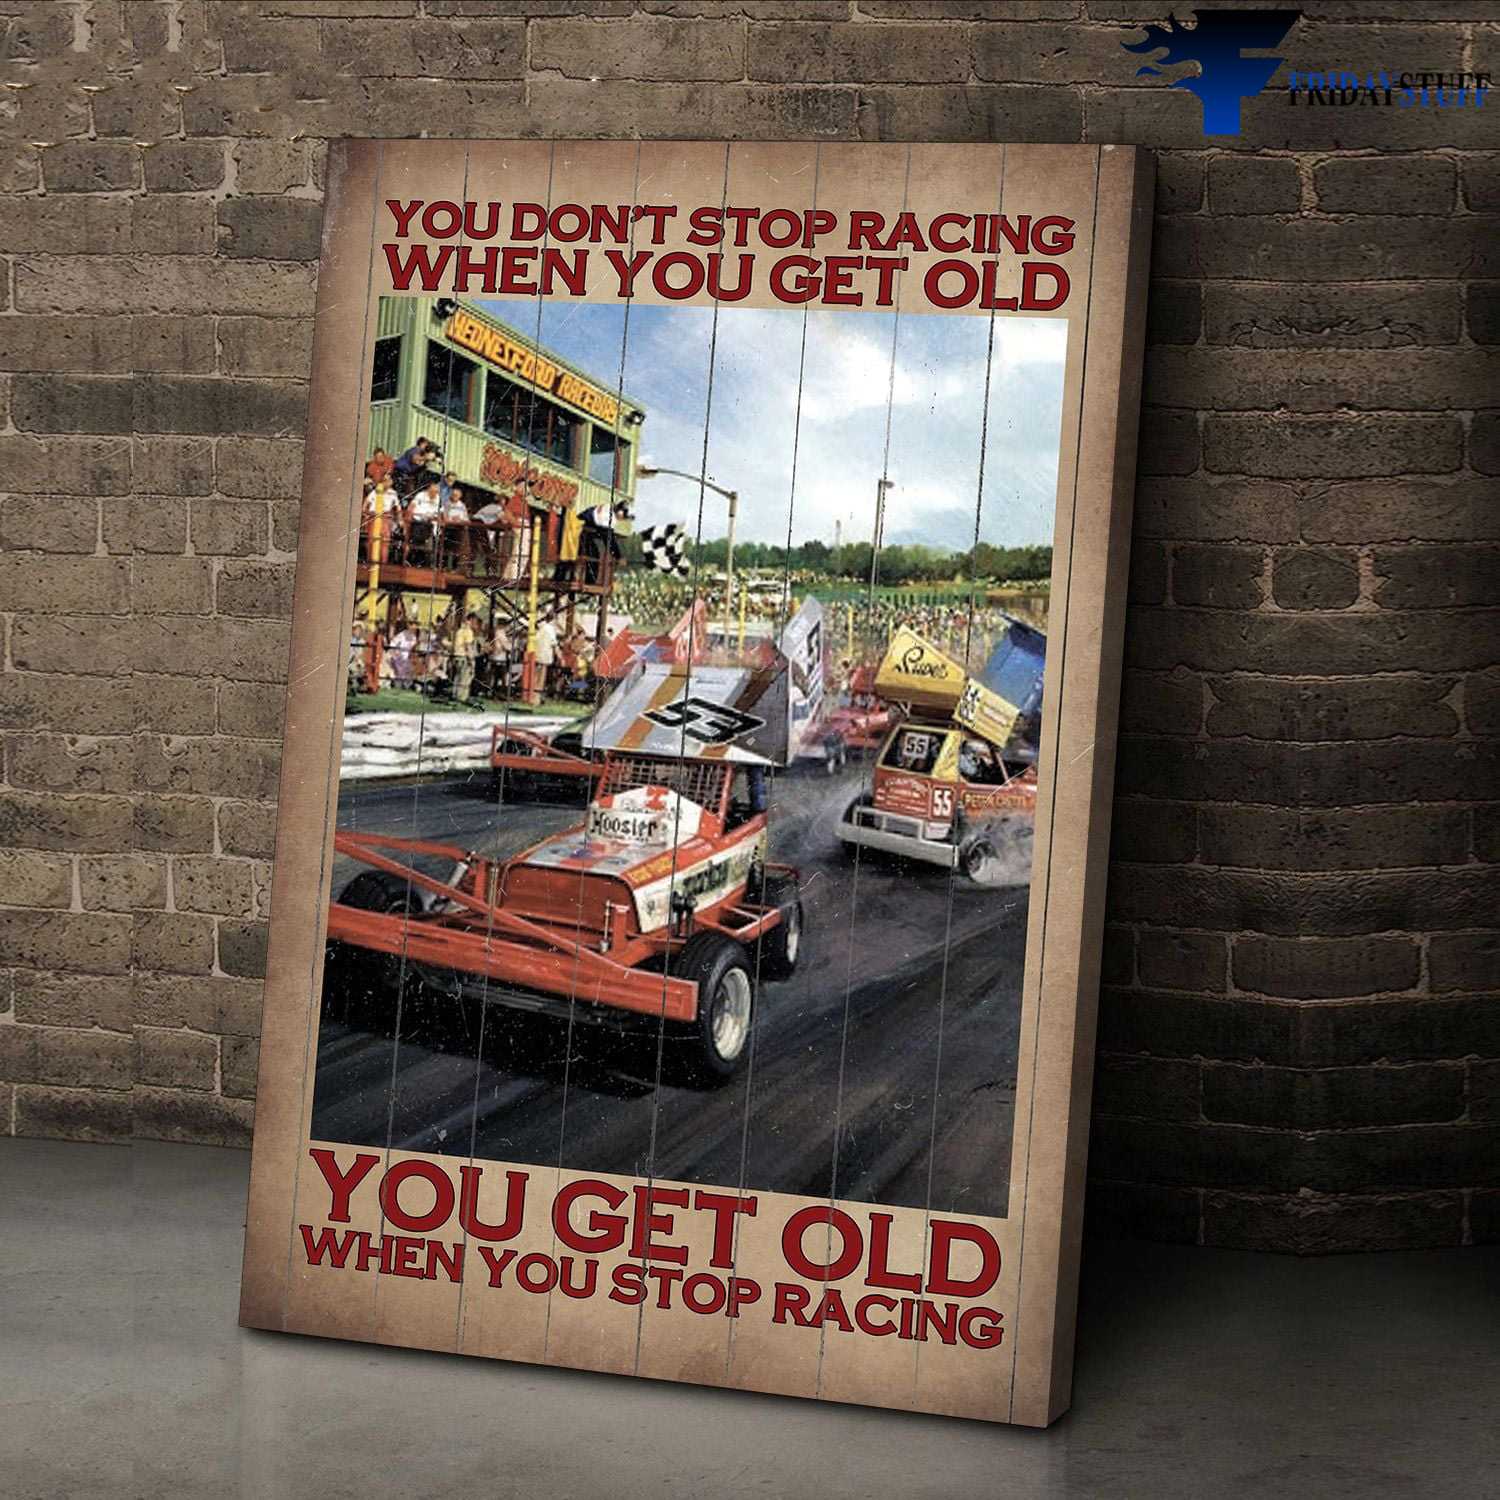 Racing Car - You Don't Stop Racing When You Get Old, You Get Old When You Stop Racing, Car Racer